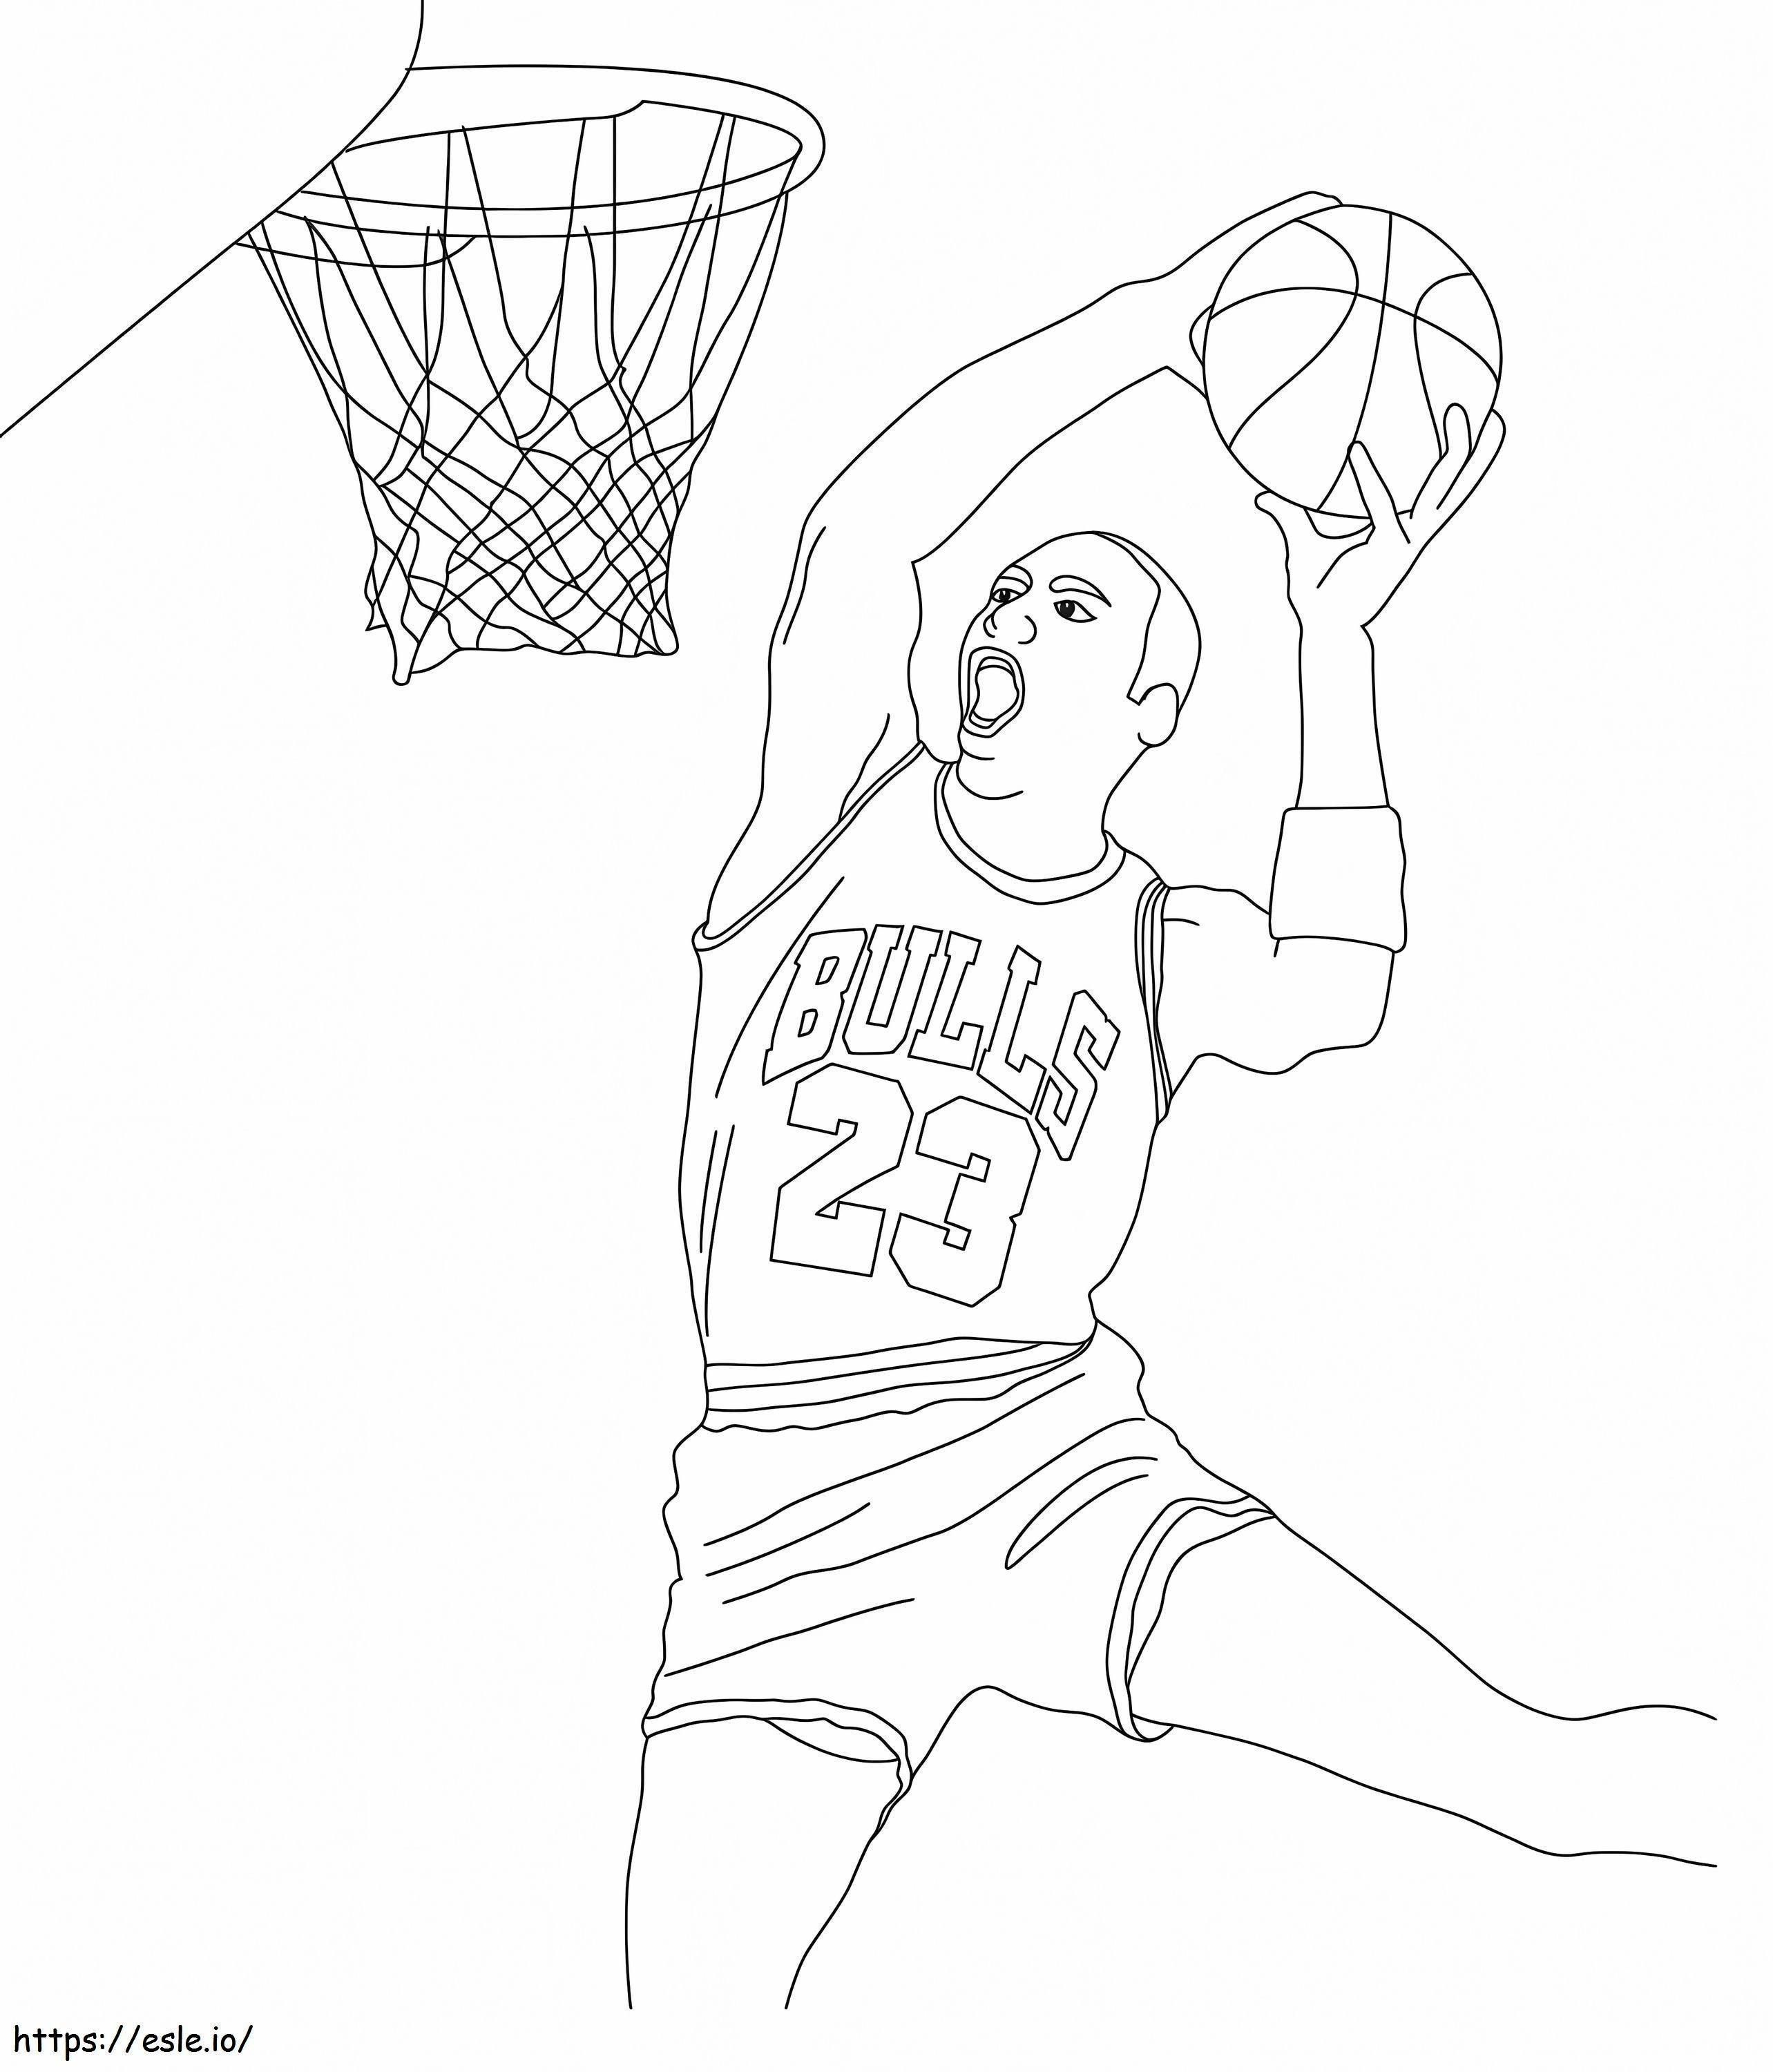 Michael Jordan Dunk coloring page